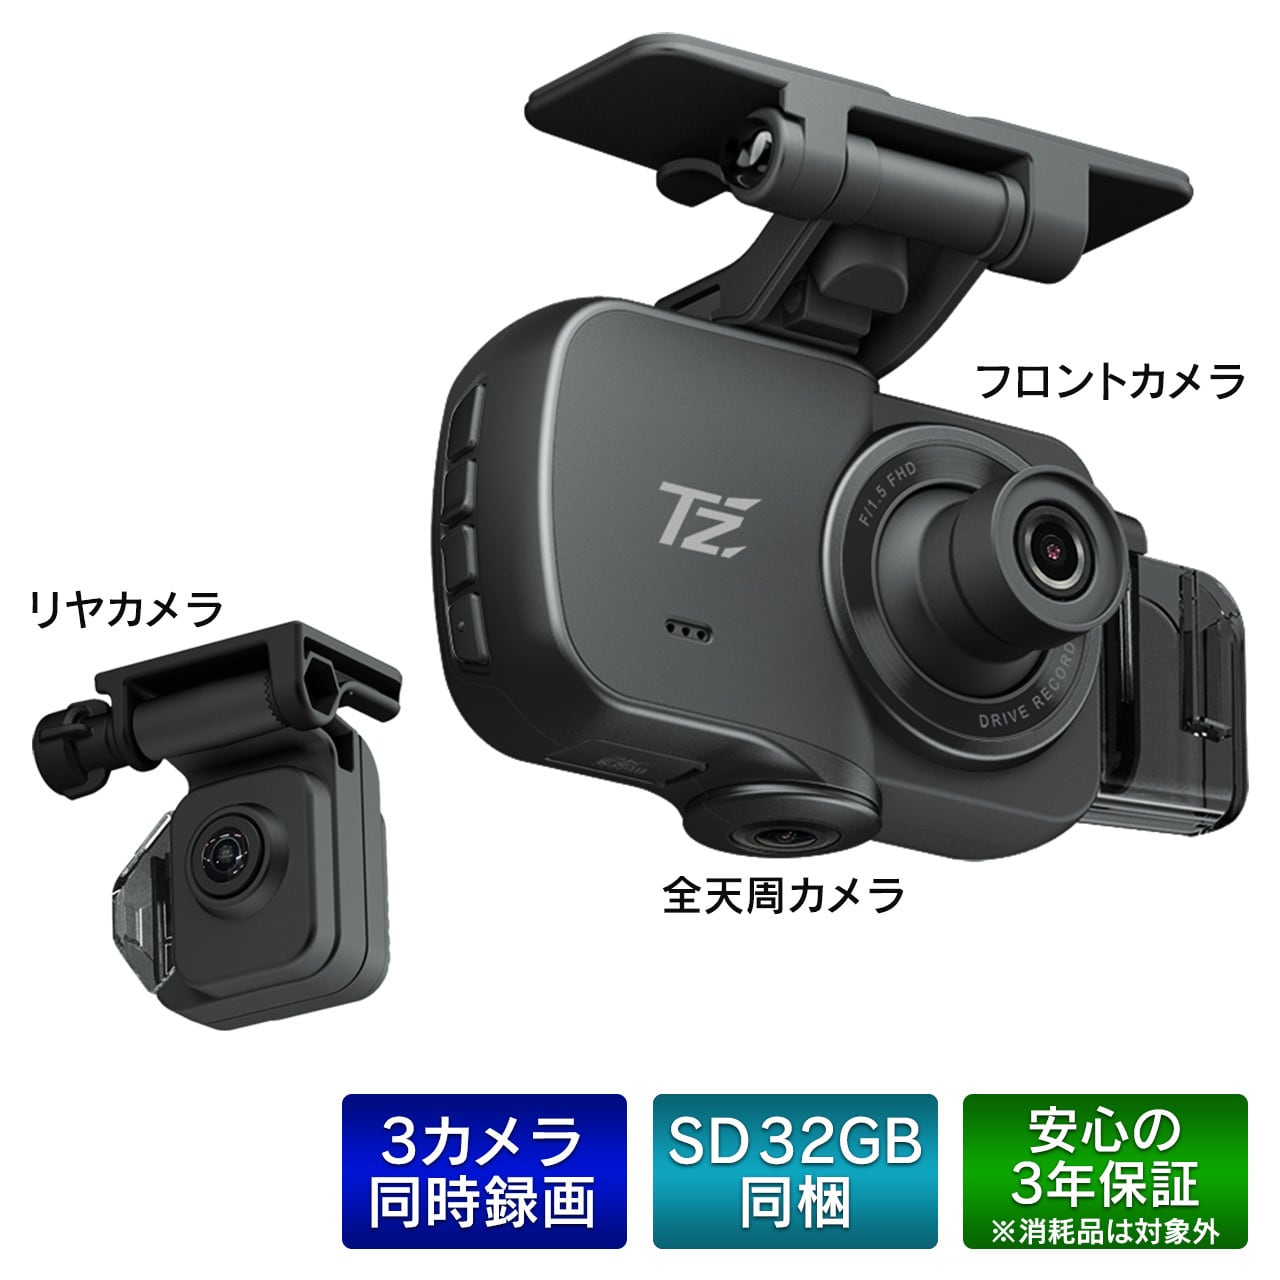 TZ ドライブレコーダー TZ-DR300 本体、リアカメラセット